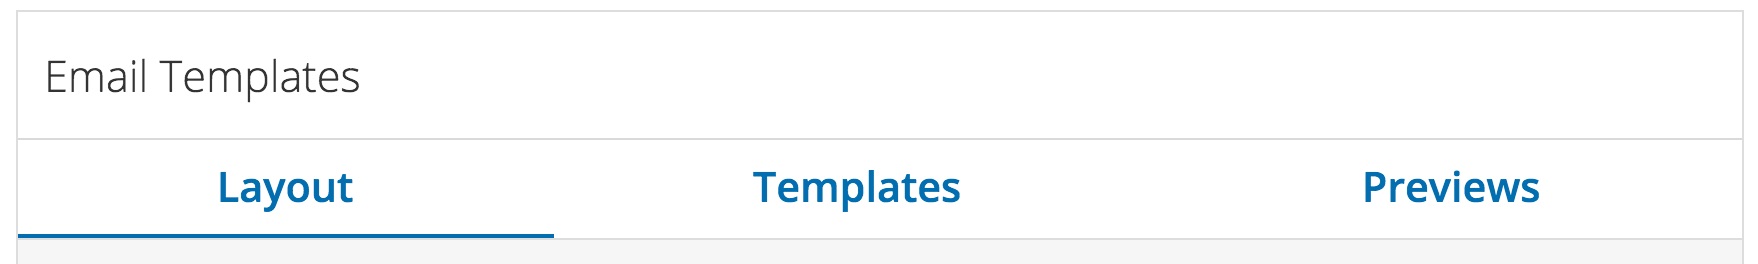 email_templates_header.jpg